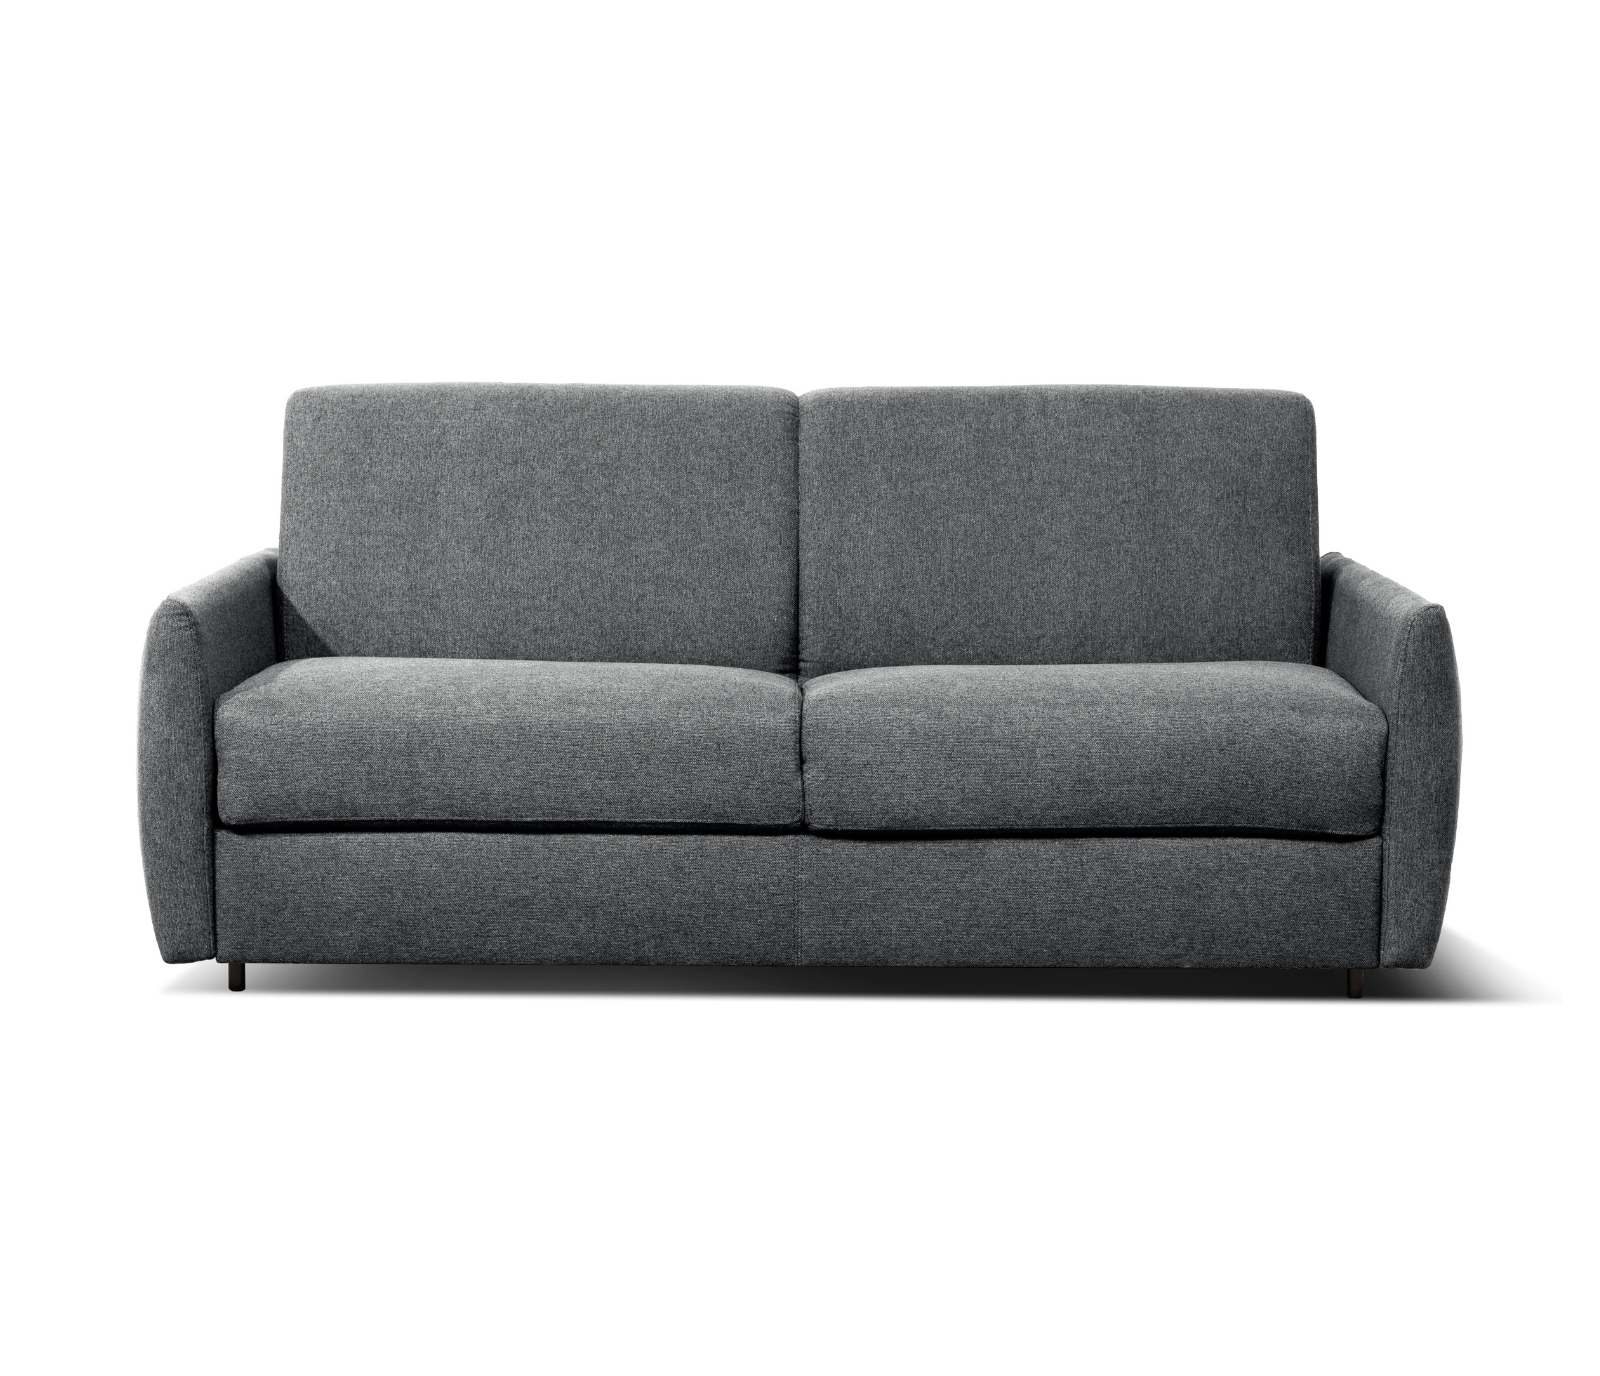 Vitale Double Sofa Sleeper - Anthracite Grey Fabric